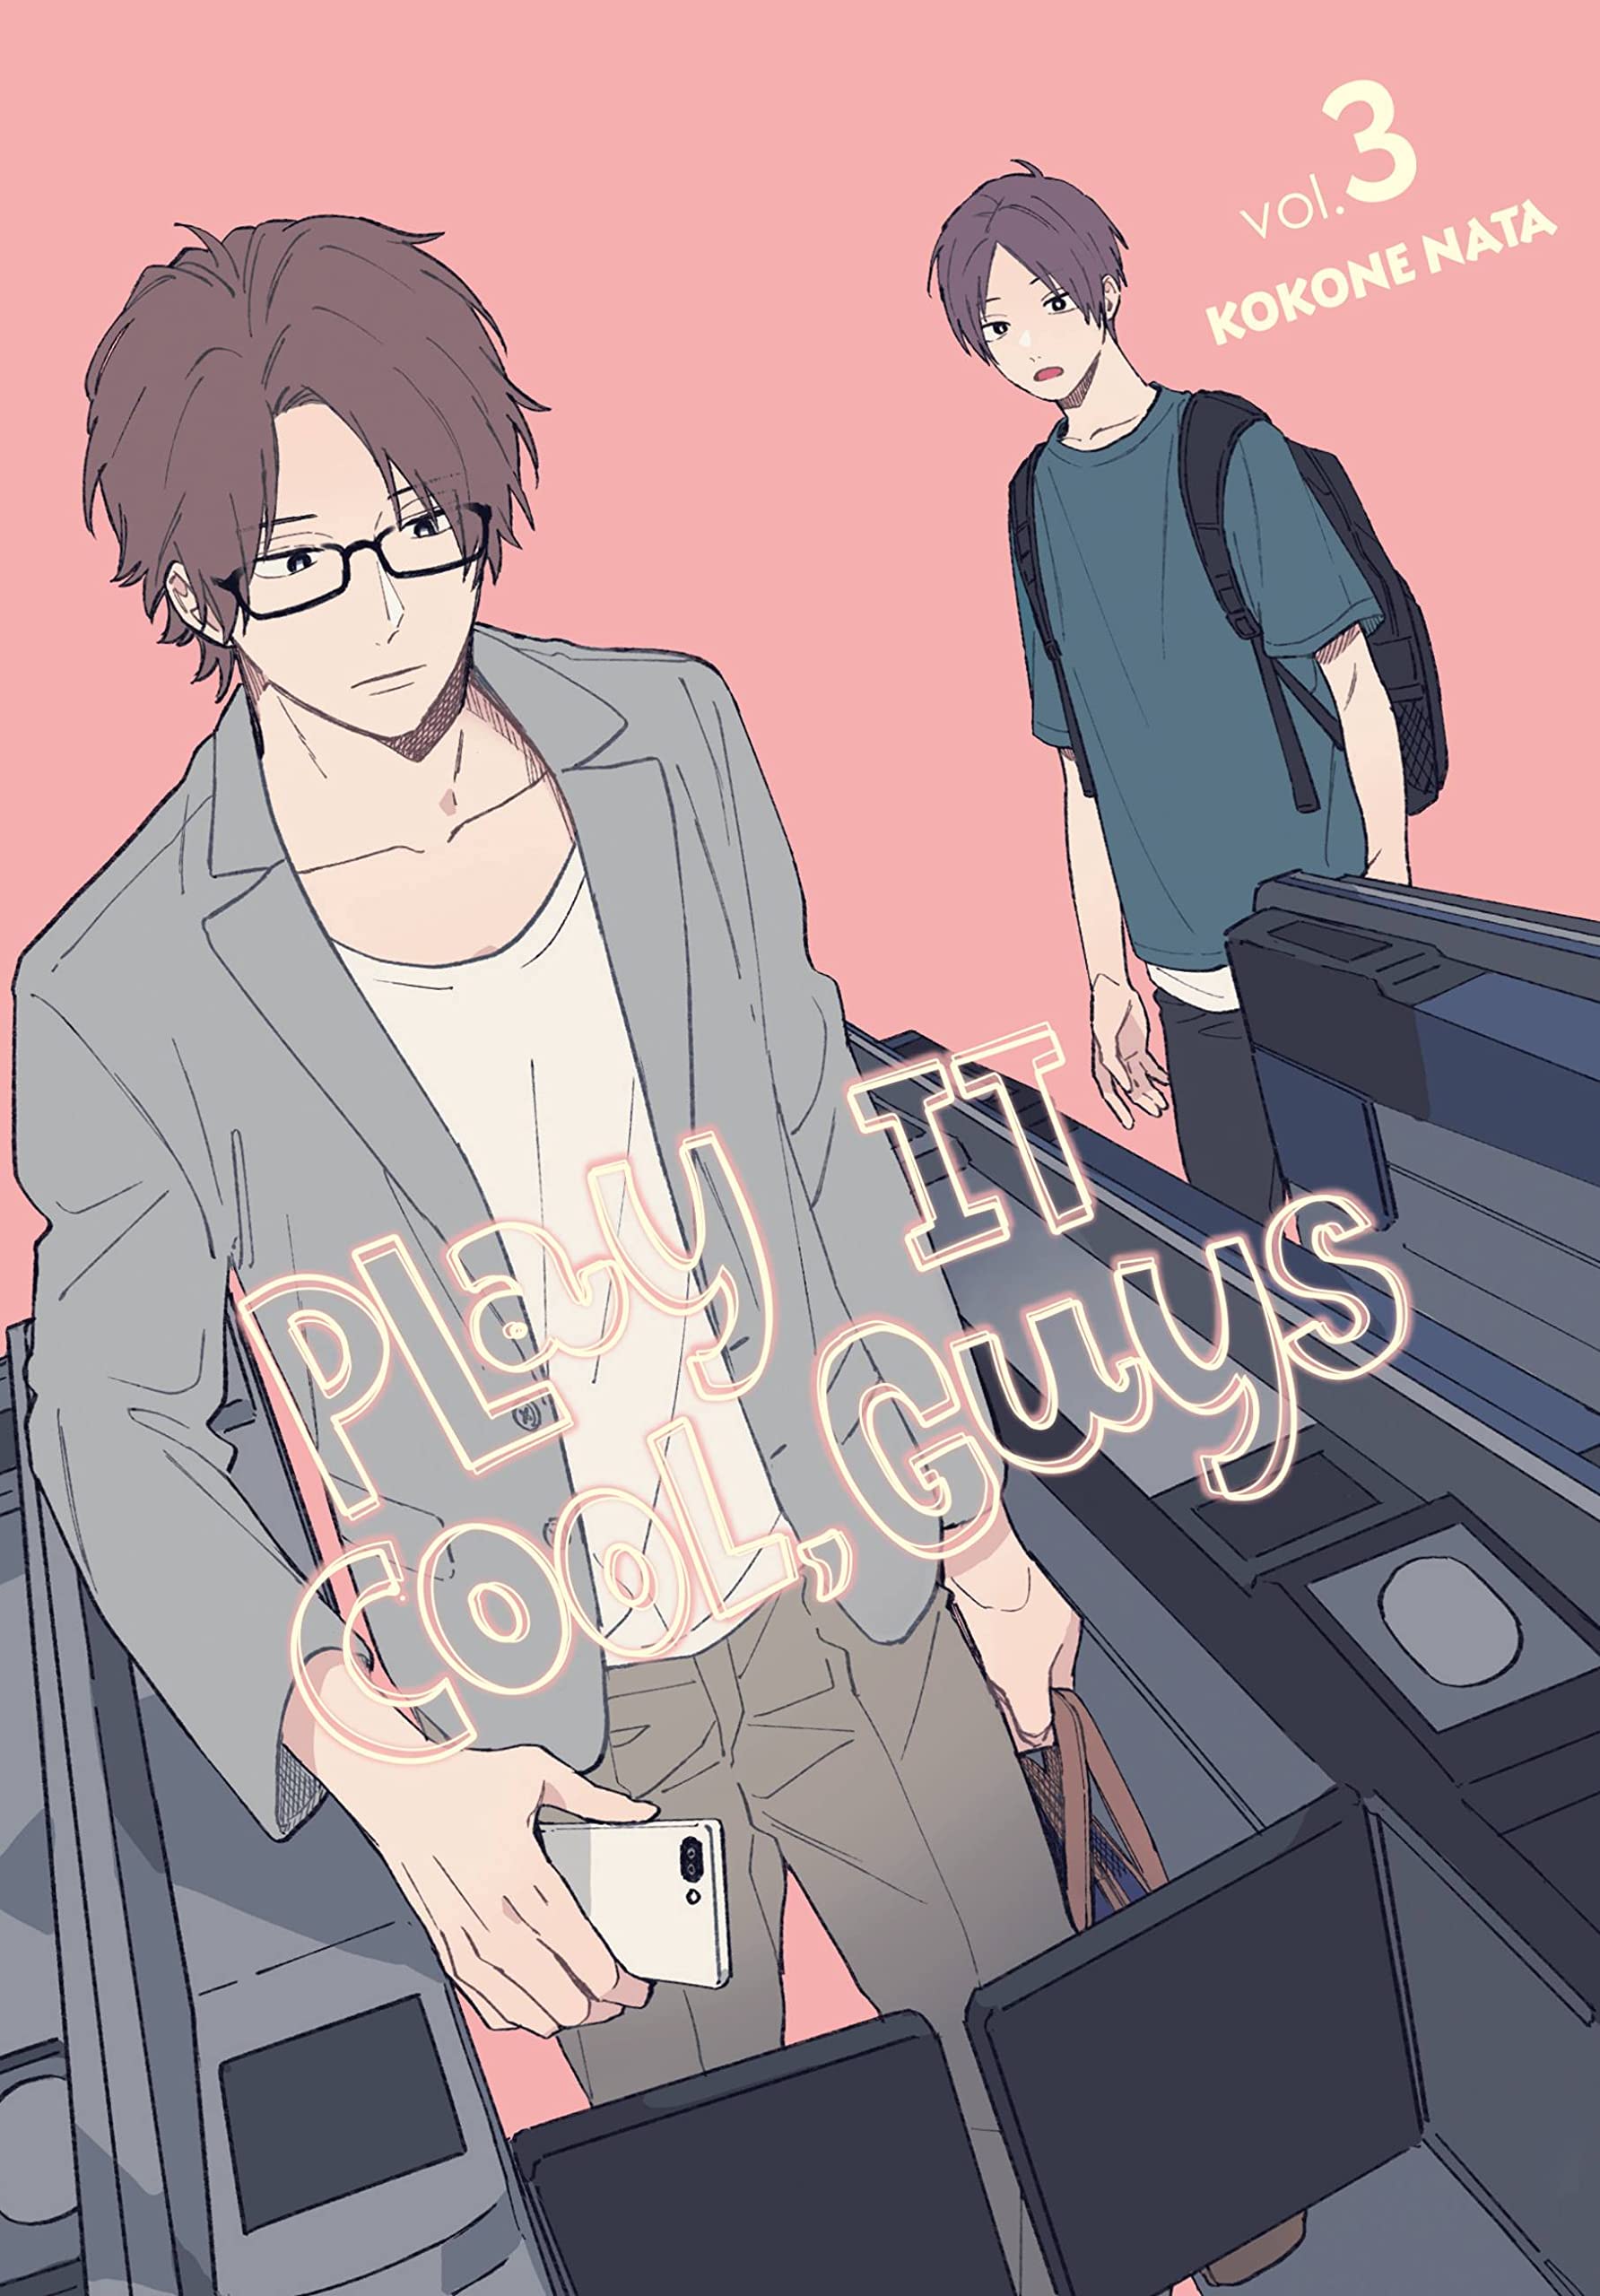 Play It Cool, Guys Comedy Manga Gets TV Anime Adaptation - Crunchyroll News